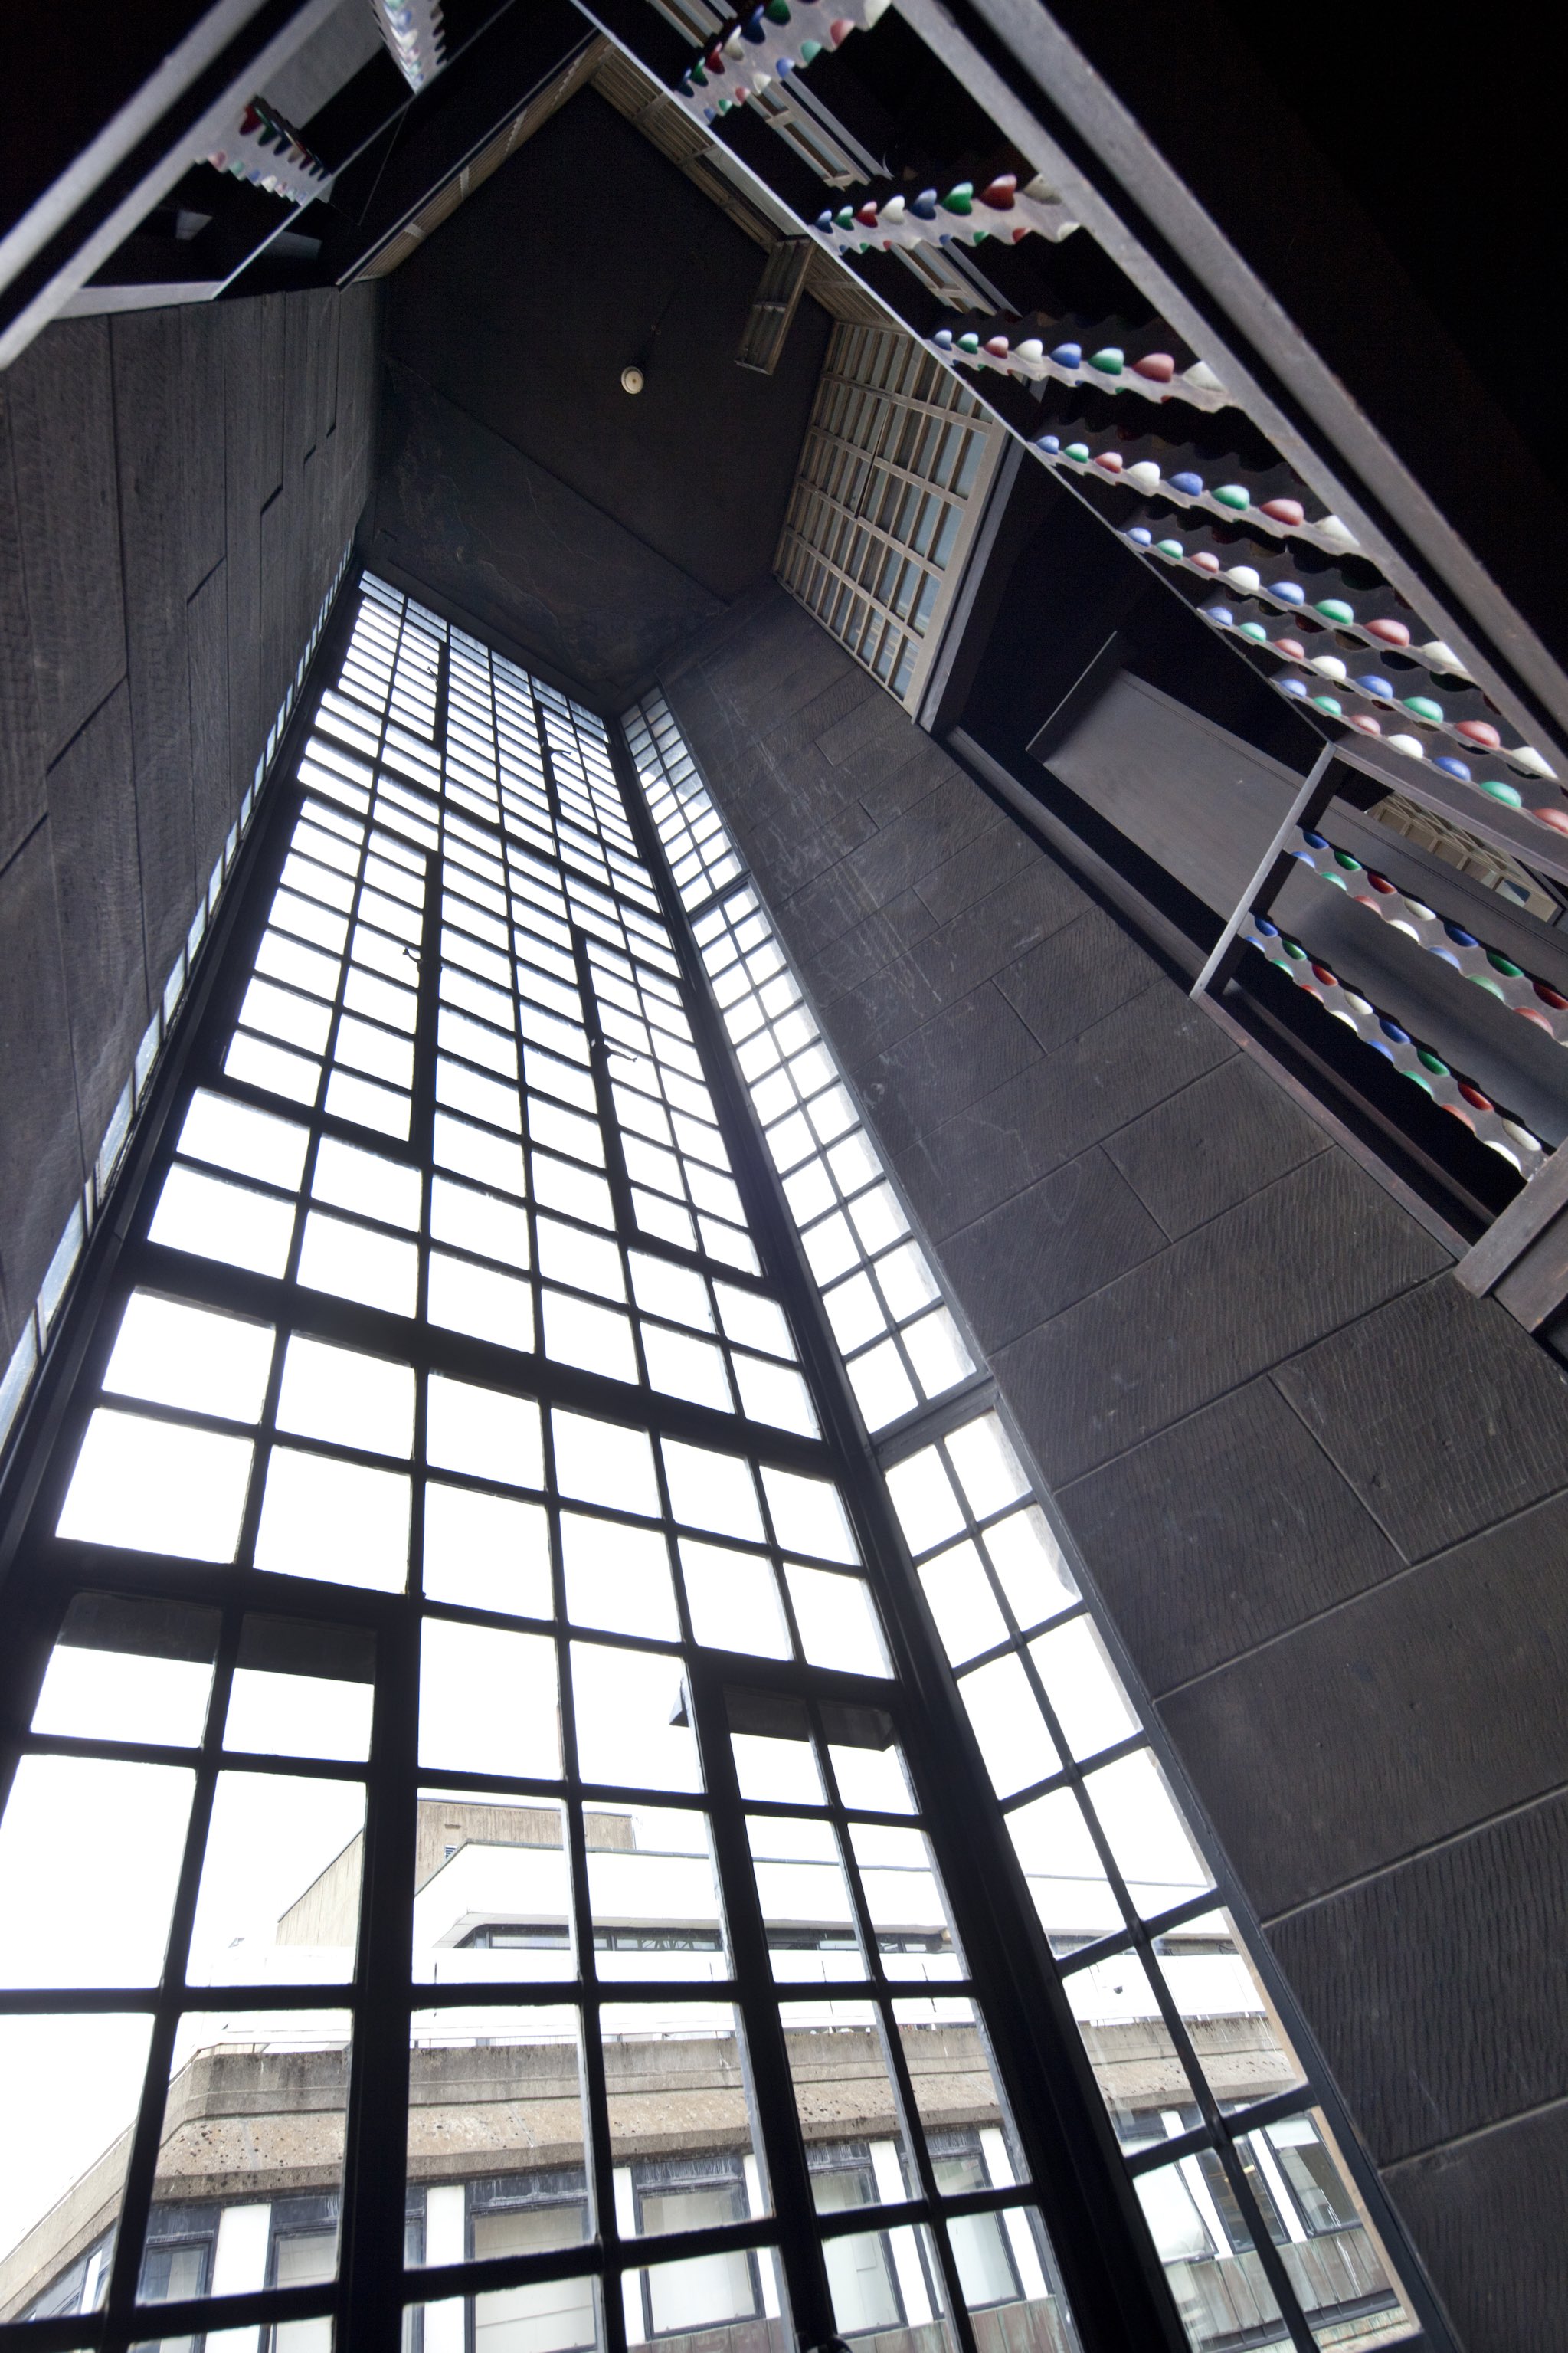 Mackintosh Library windows, Alan McAteer